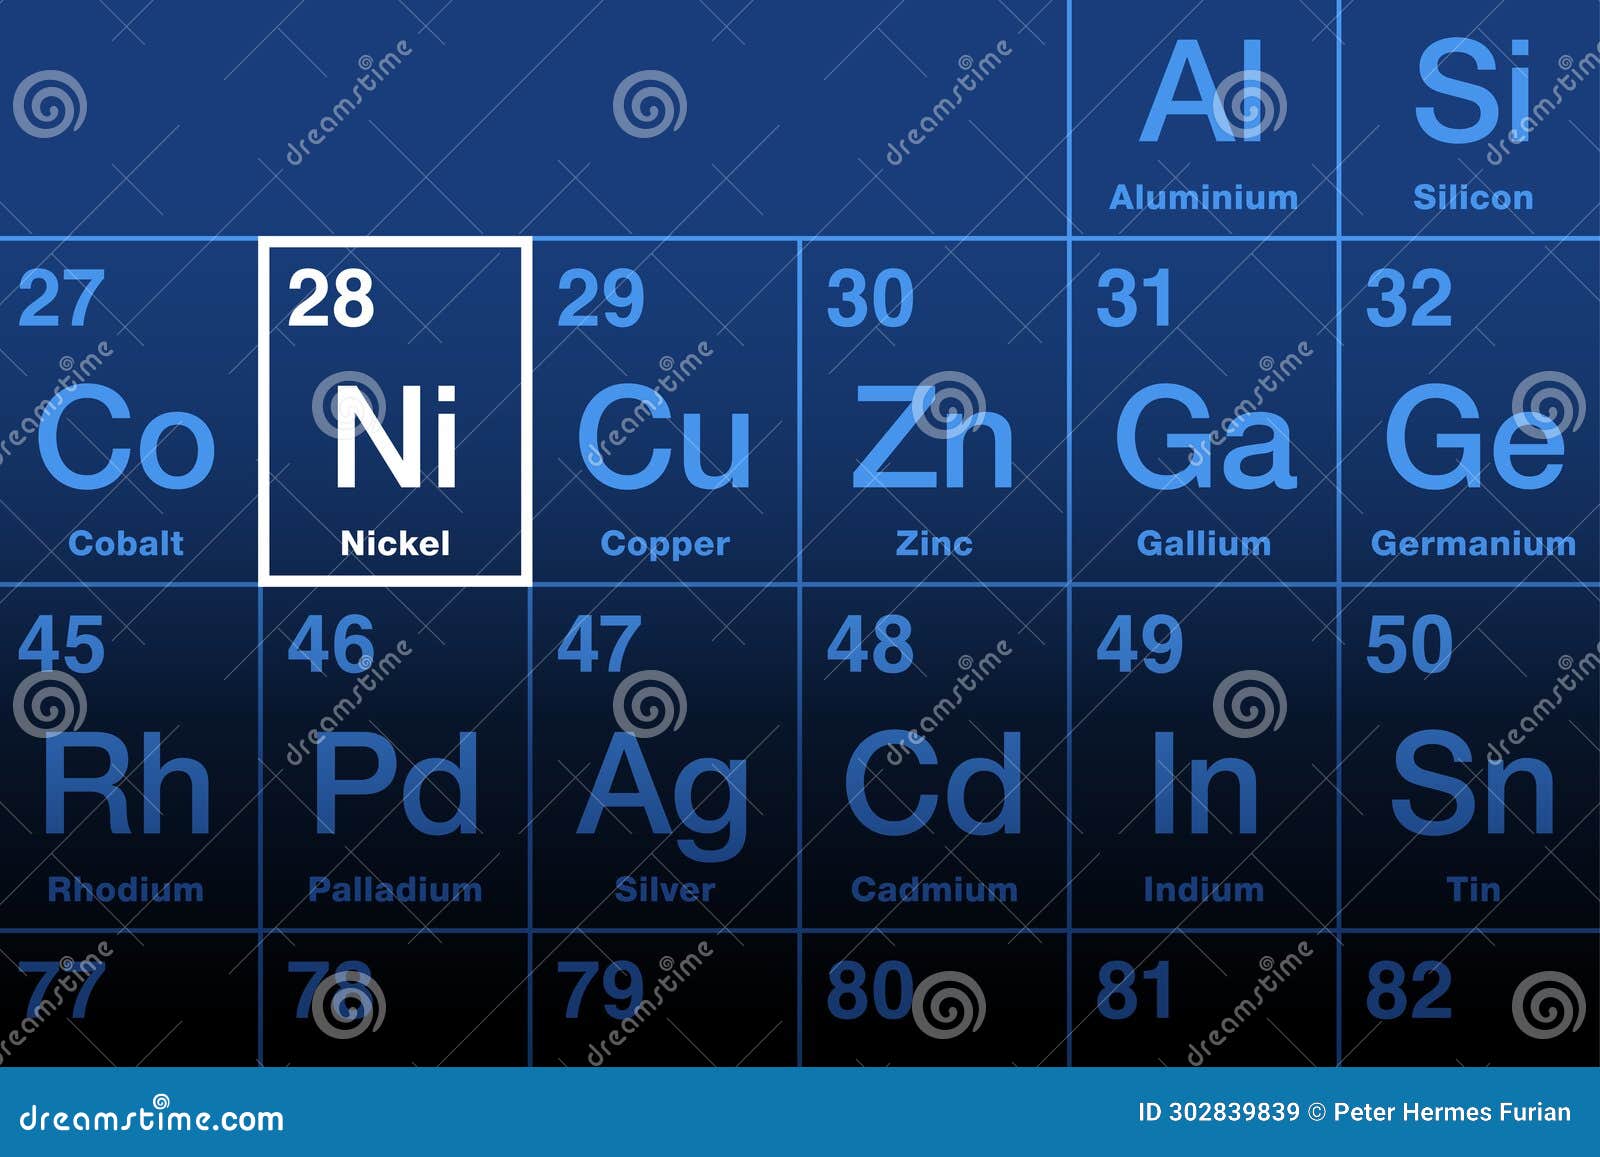 nickel  on the periodic table, metal with  ni